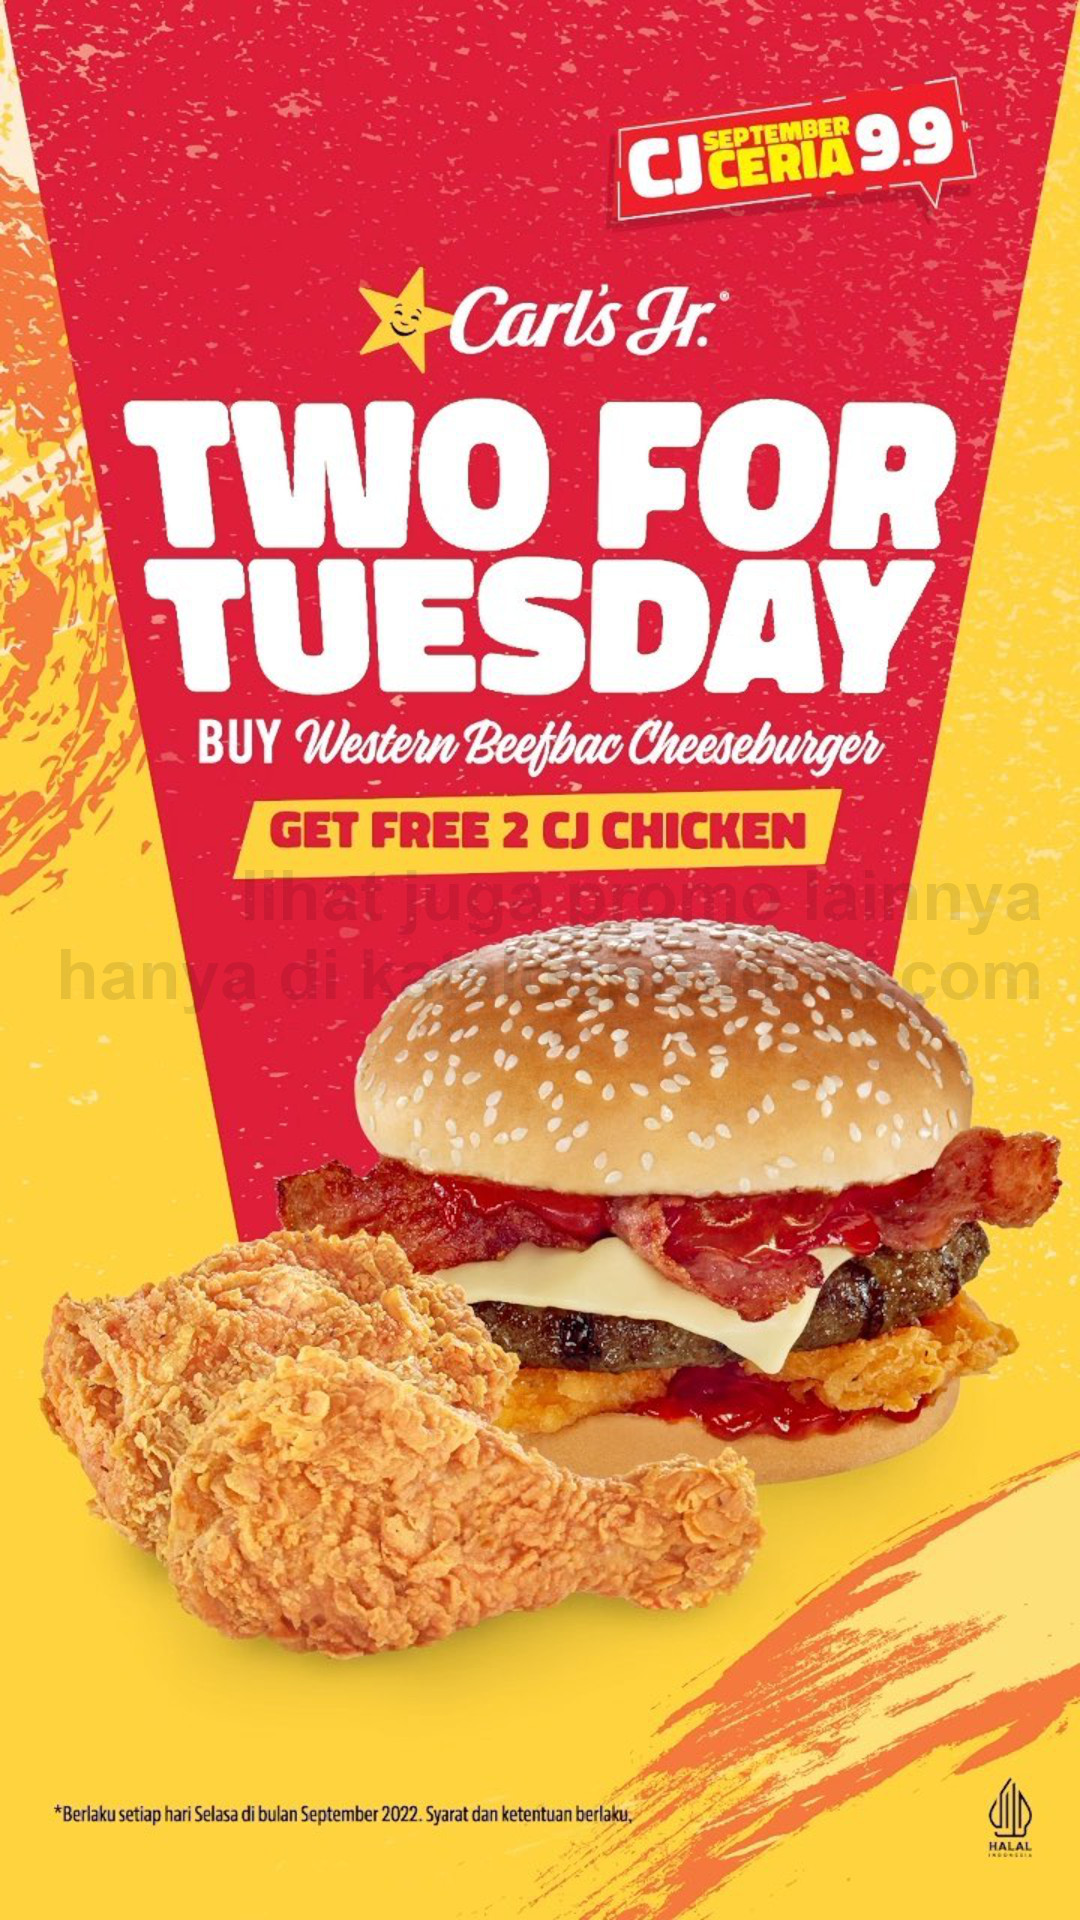 Promo CARLS JR Two For Tuesday - GRATIS 2 CJ Chicken setiap pesan Western Beefbac Cheeseburger.